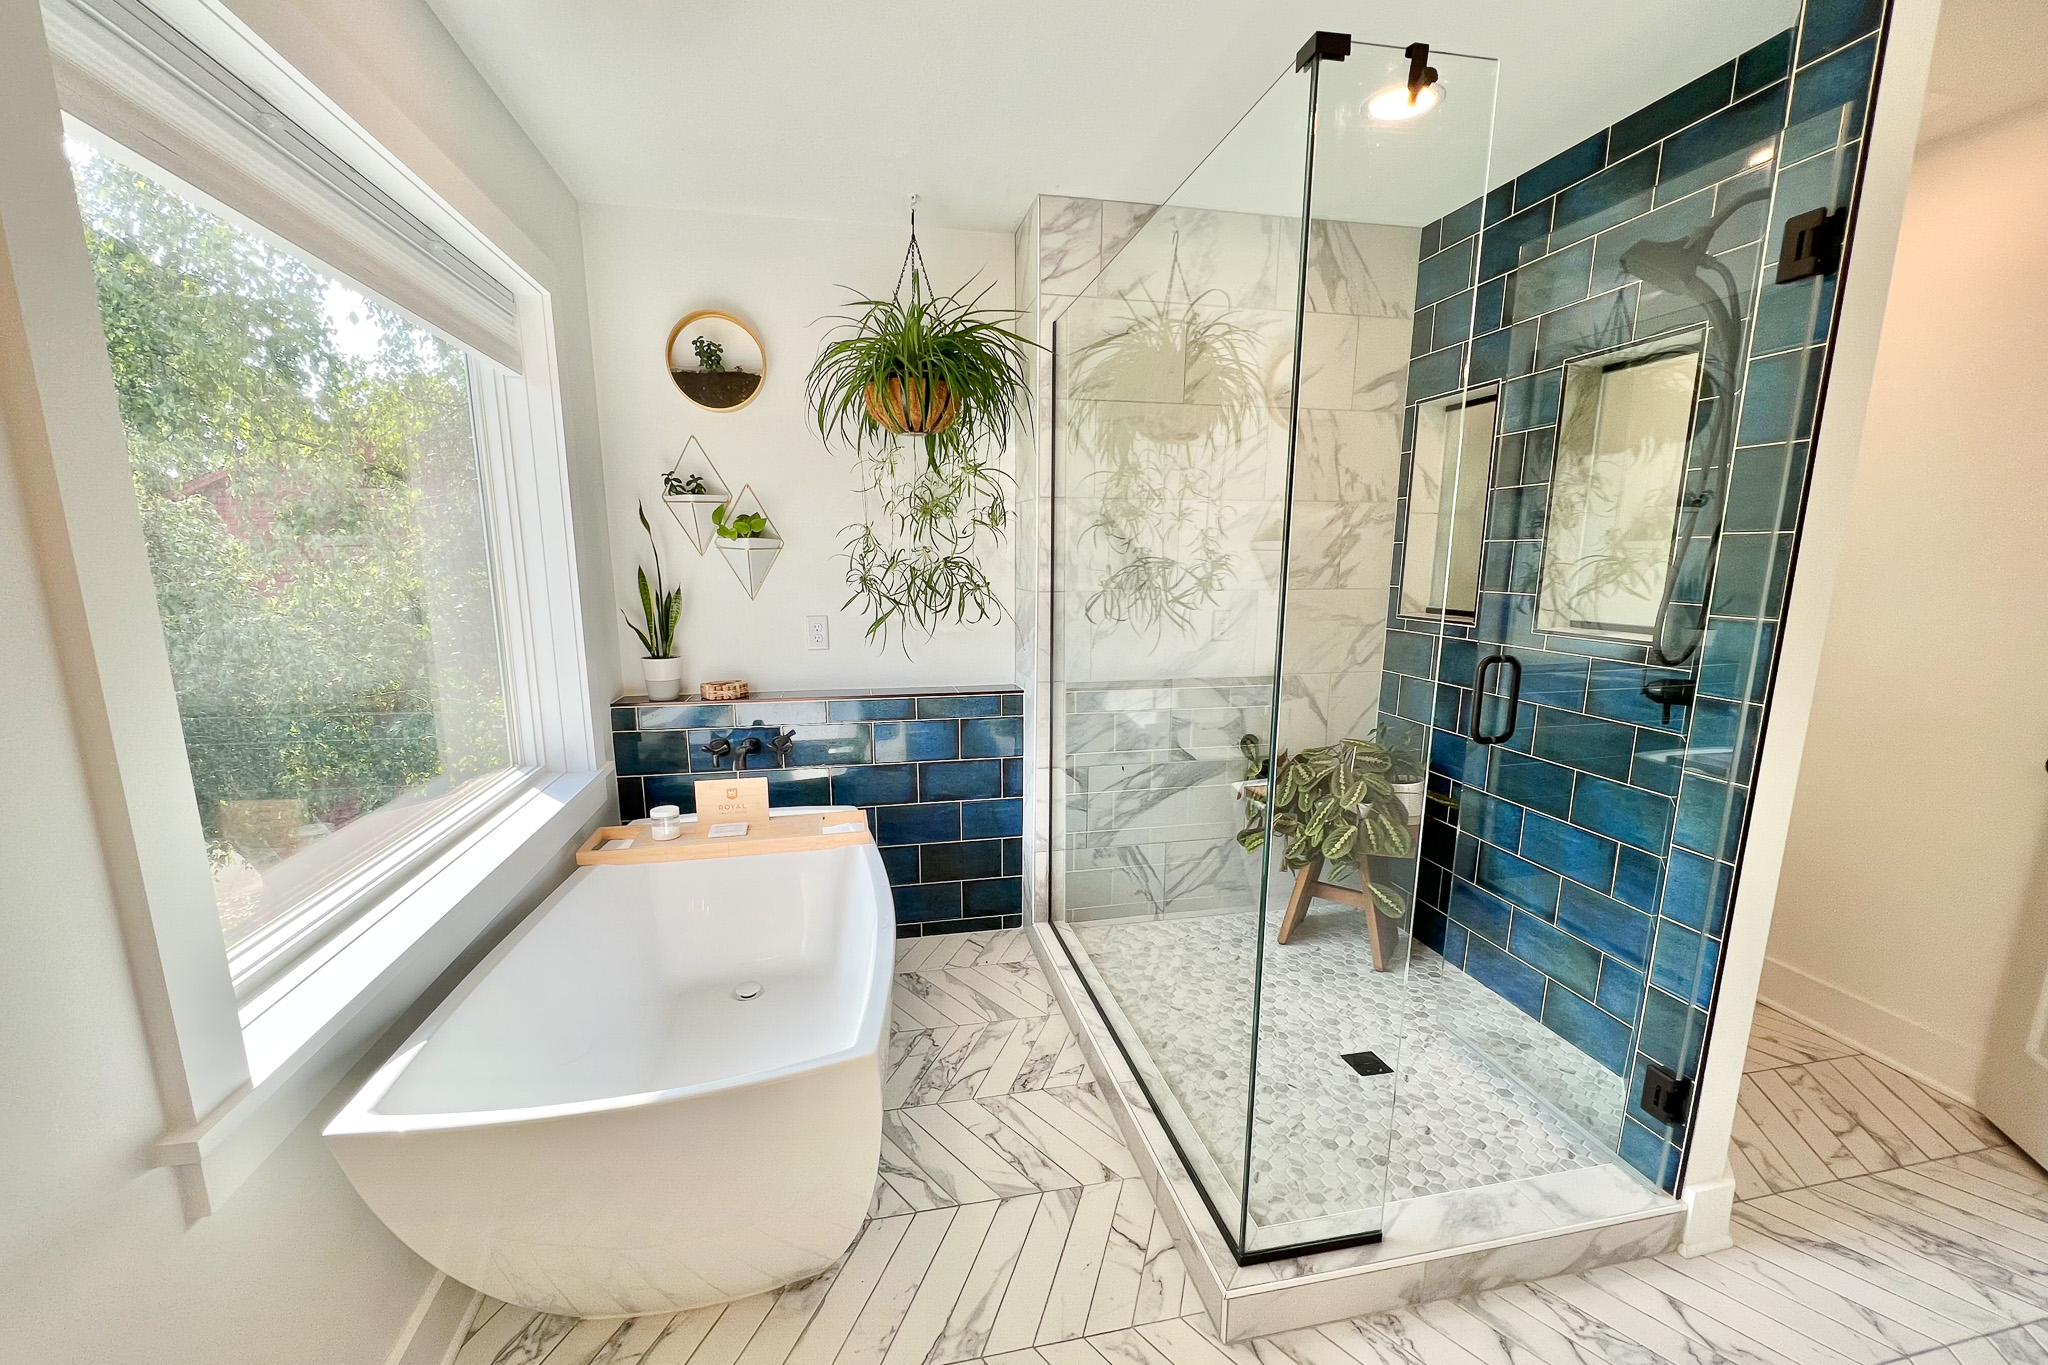 Tiled master bath - freestanding tub and shower